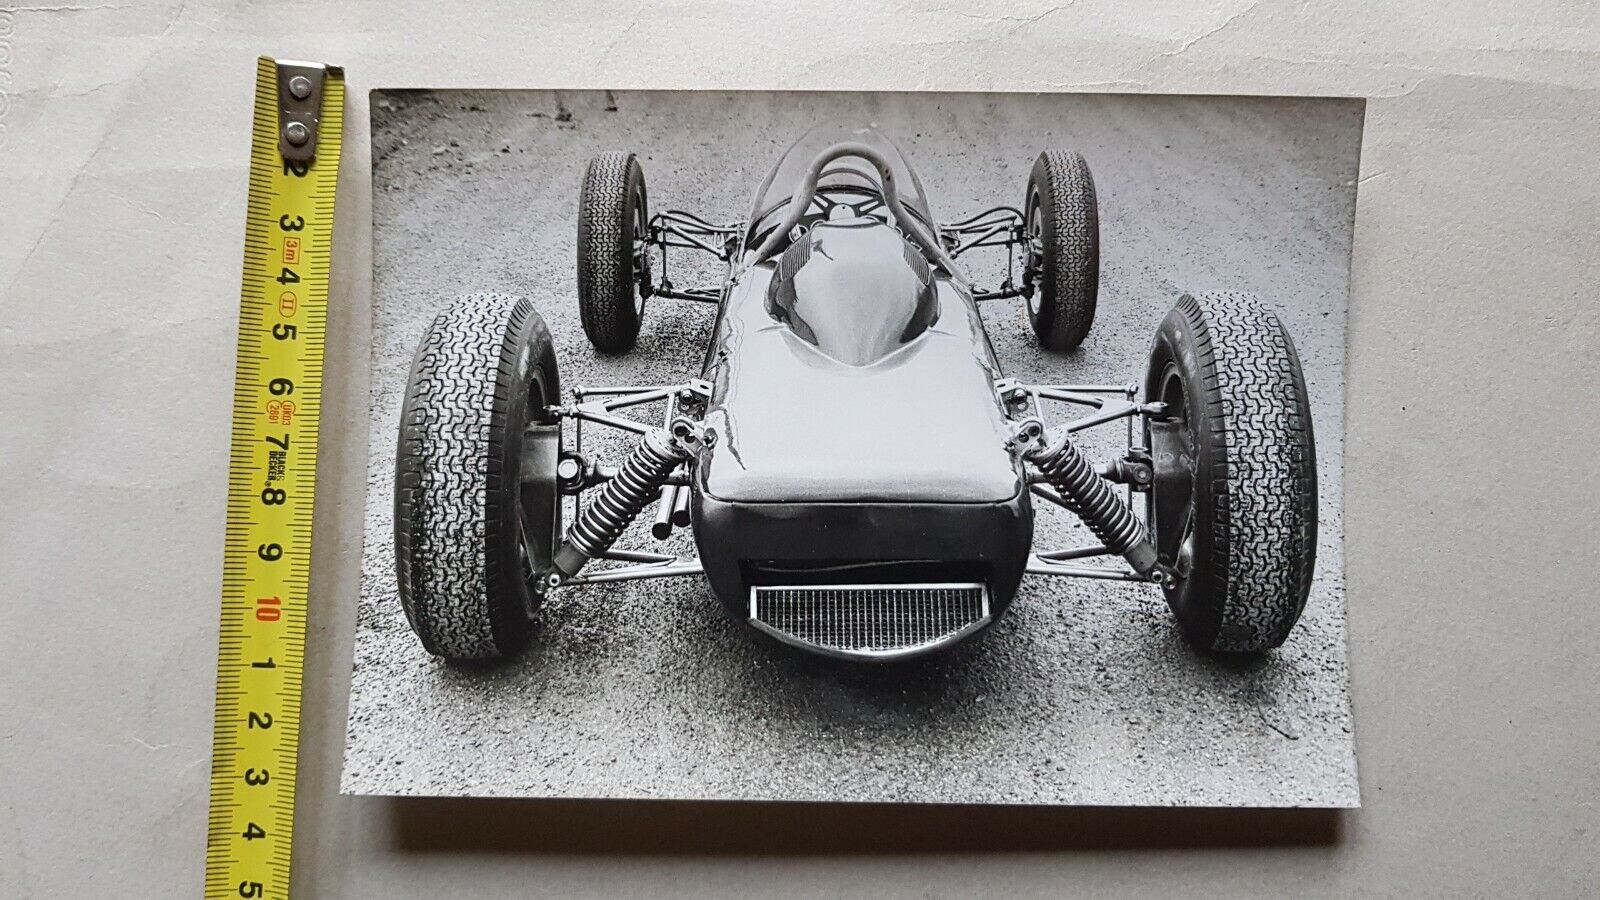 ATS 1500 8V Formula 1 1962 foto originale da cartella stampa no depliant